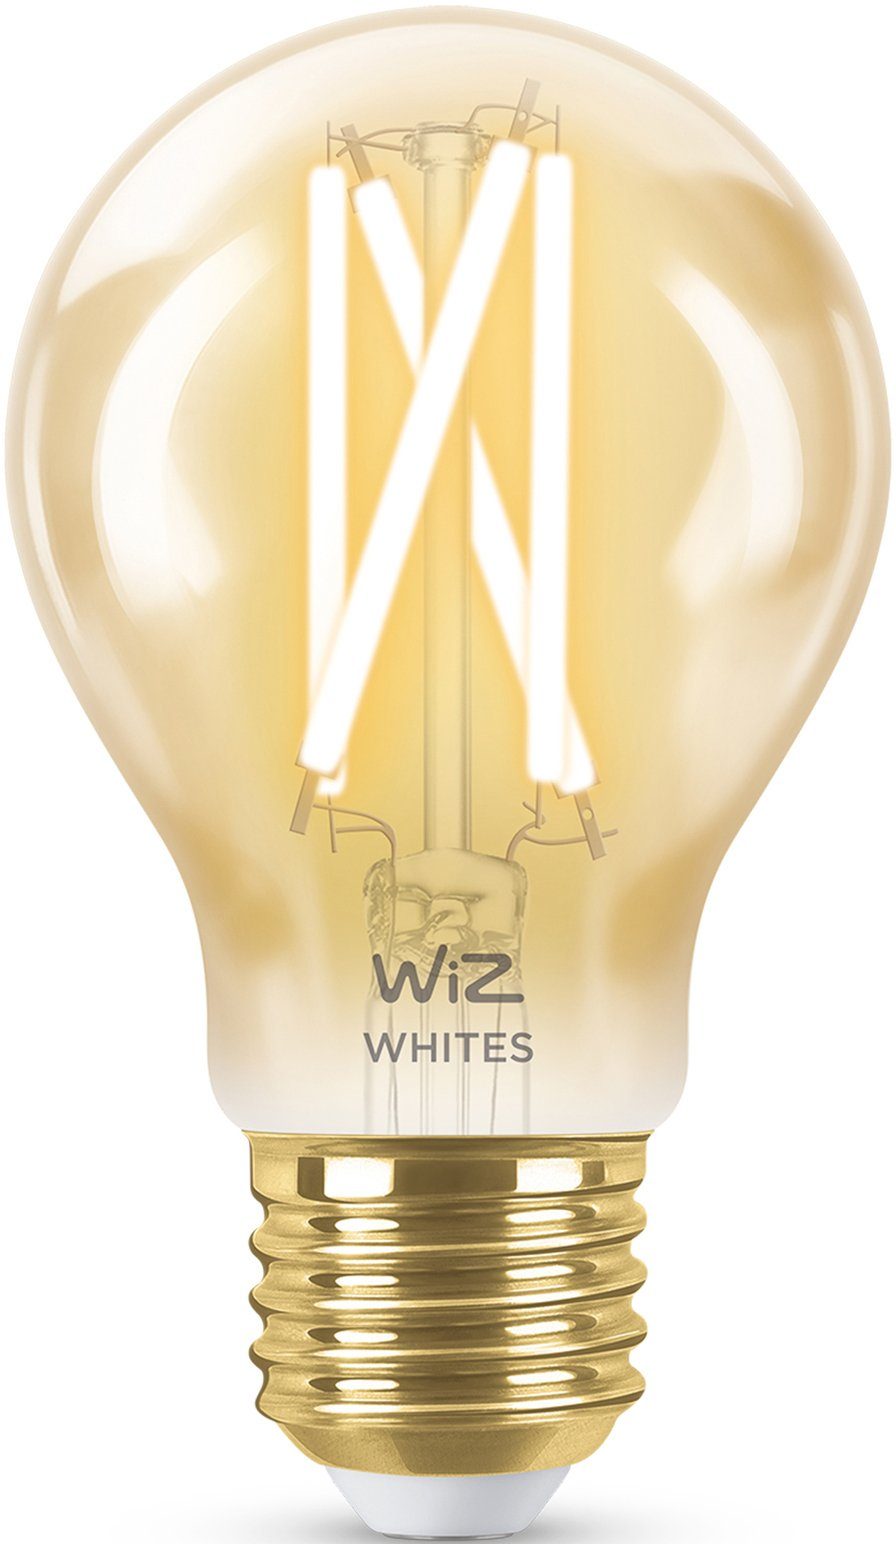 Filament Warmweiß, Vintage-Design Wiz Amber 50W E27, Tunable St., WiZ 1 White LED klassisches für Lampen E27 Einzelpack, Filament Standardform LED-Filament